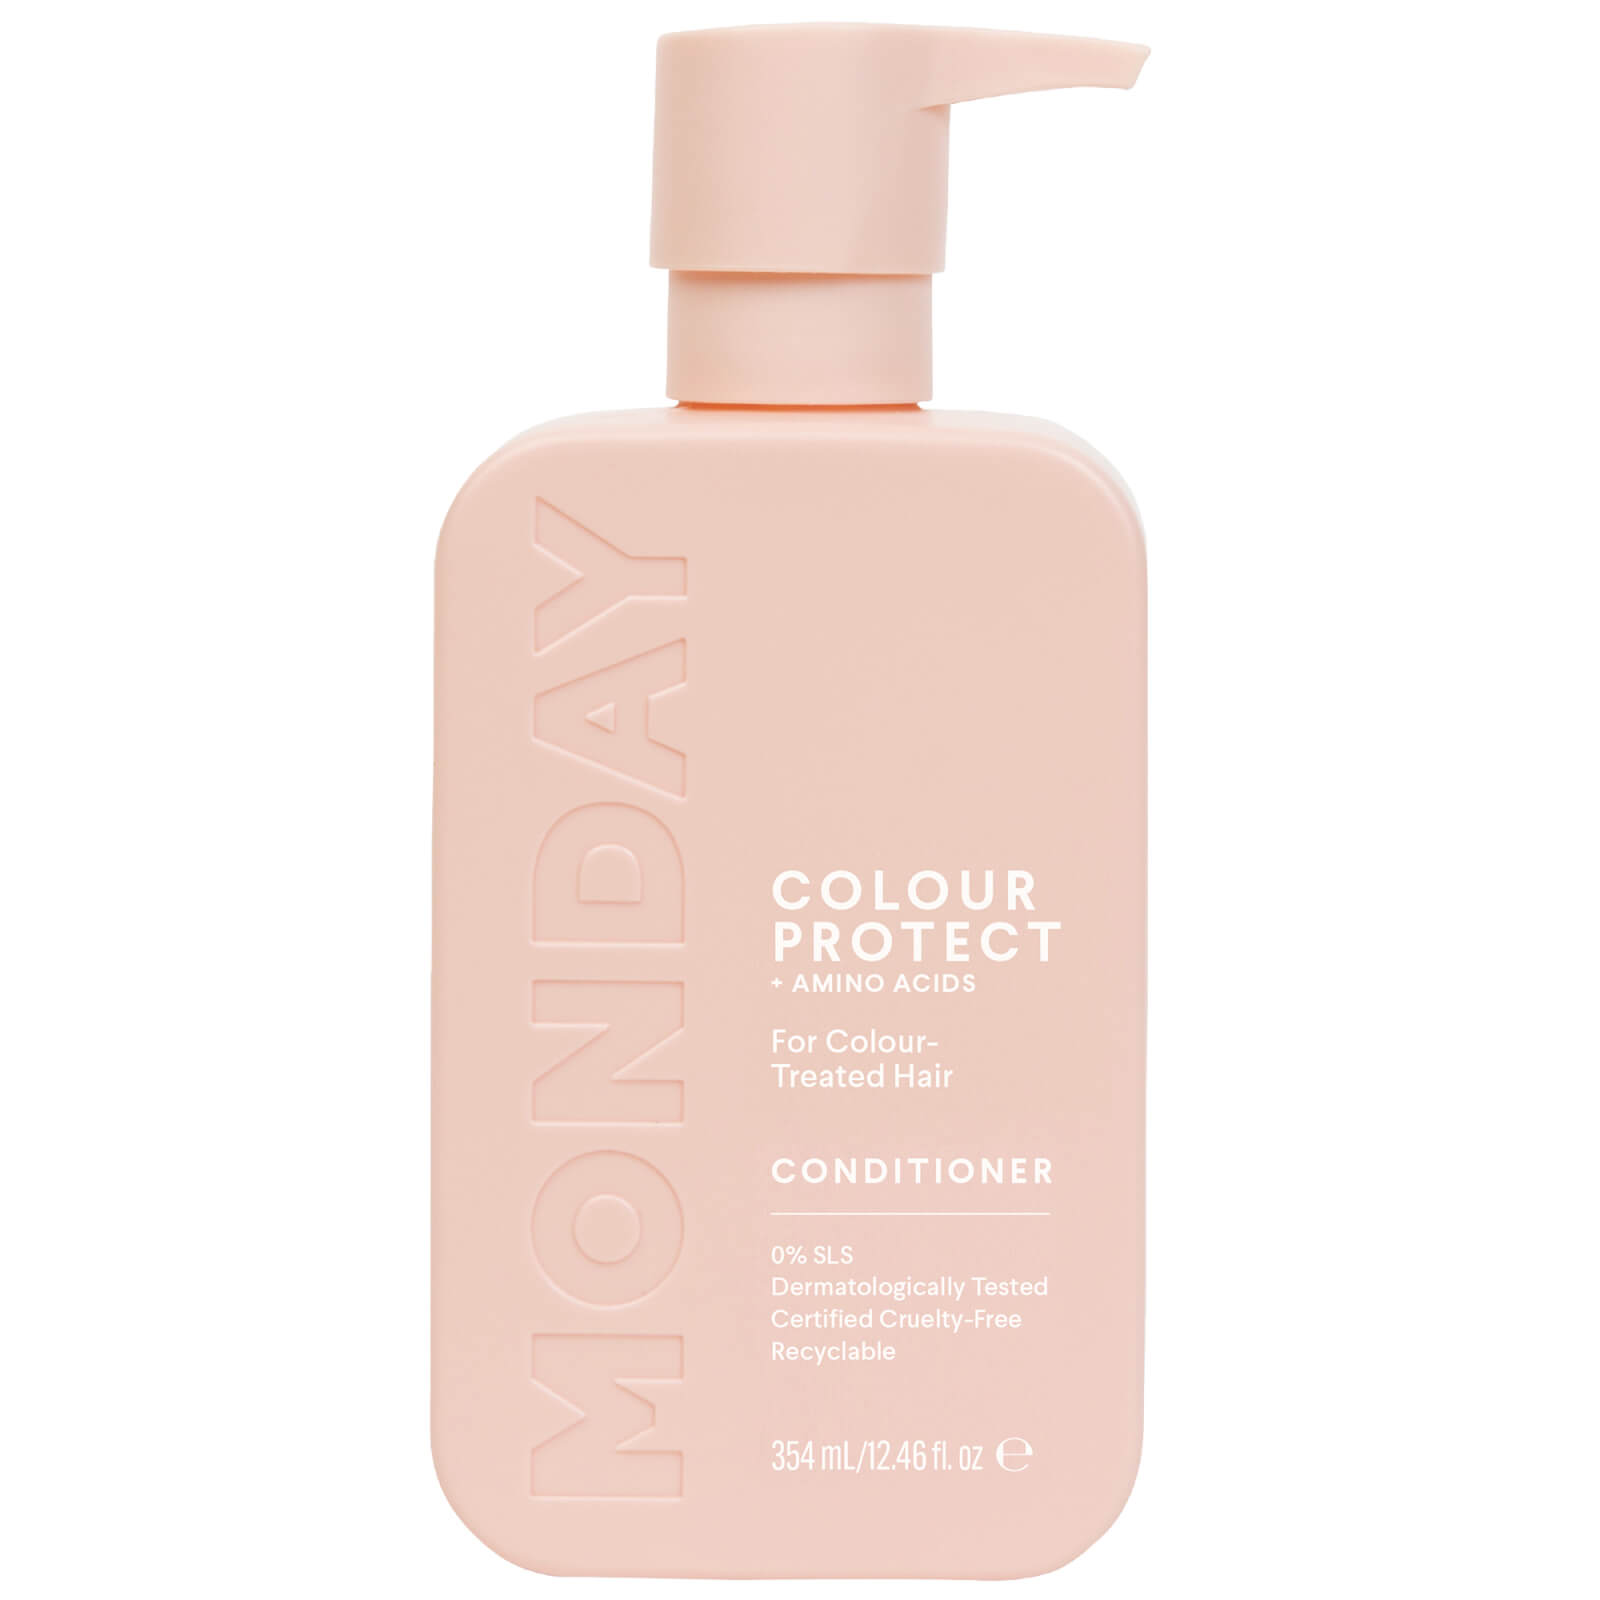 MONDAY Haircare Colour Protect Conditioner 354ml